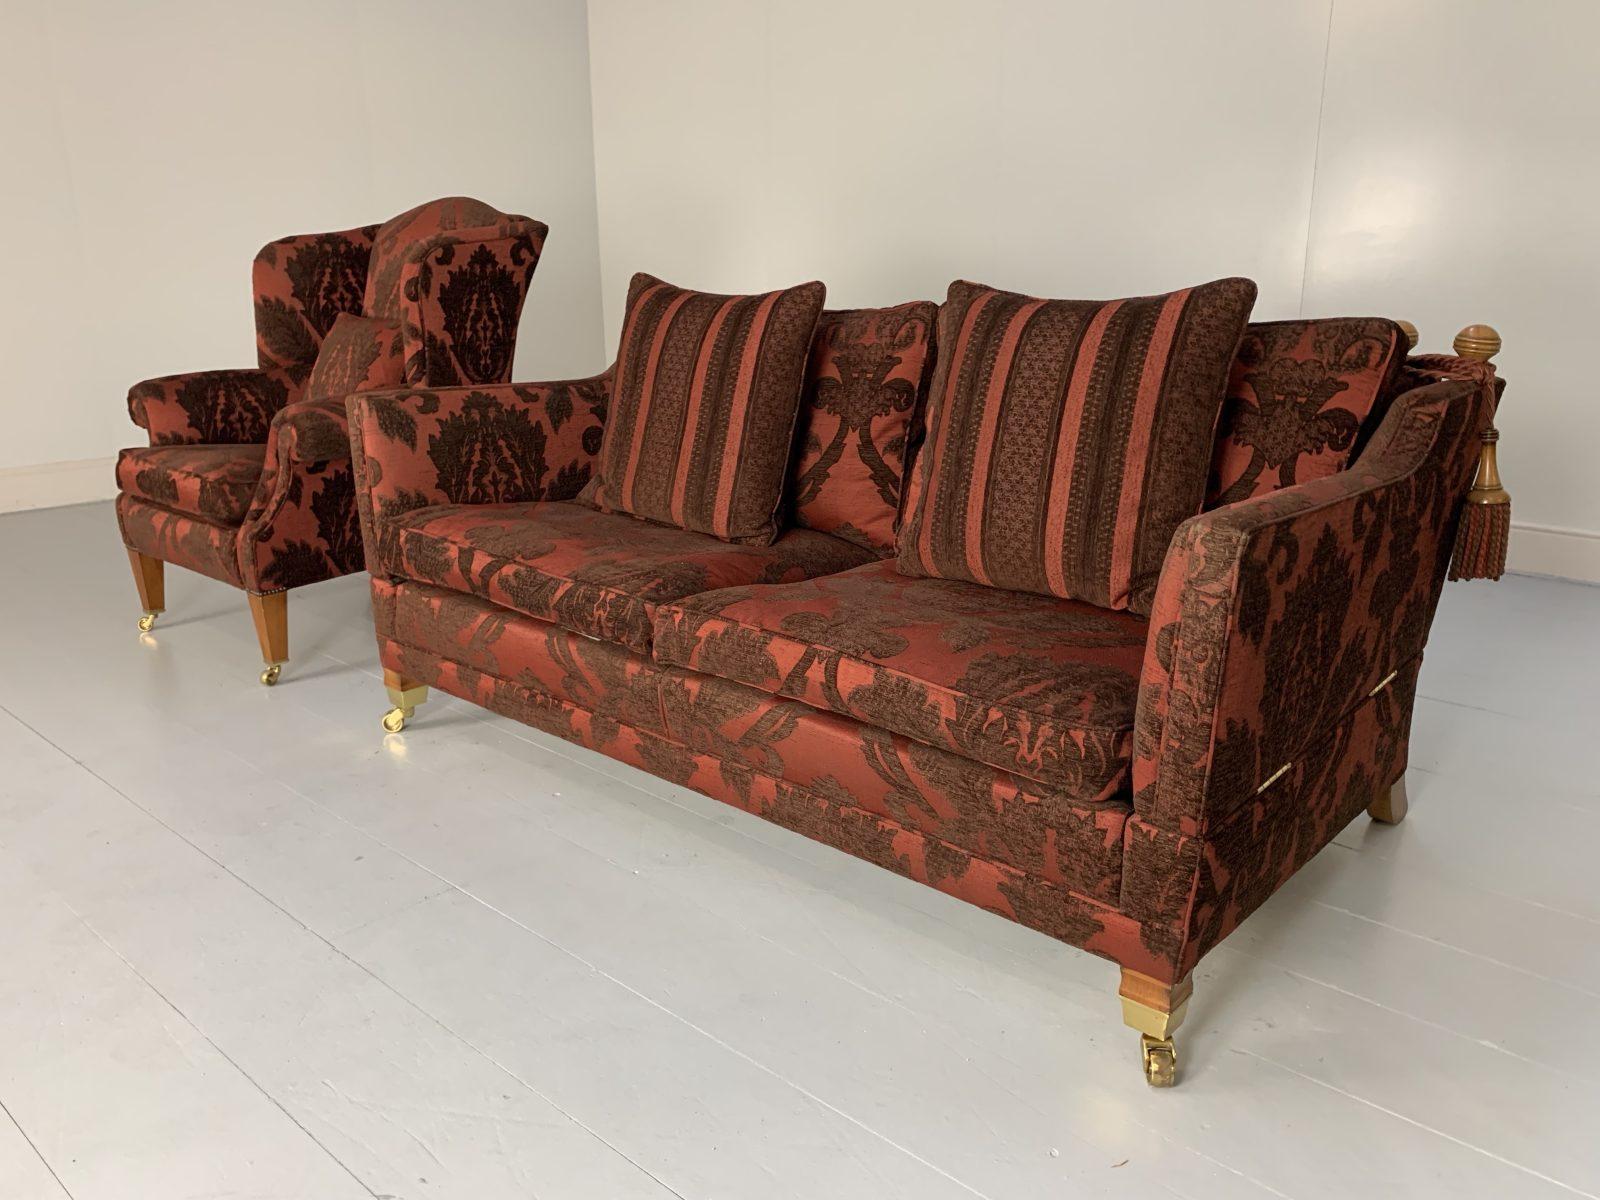 Duresta “Trafalgar” Sofa & “Devonshire” Armchair, in Deep Red Damask In Good Condition For Sale In Barrowford, GB